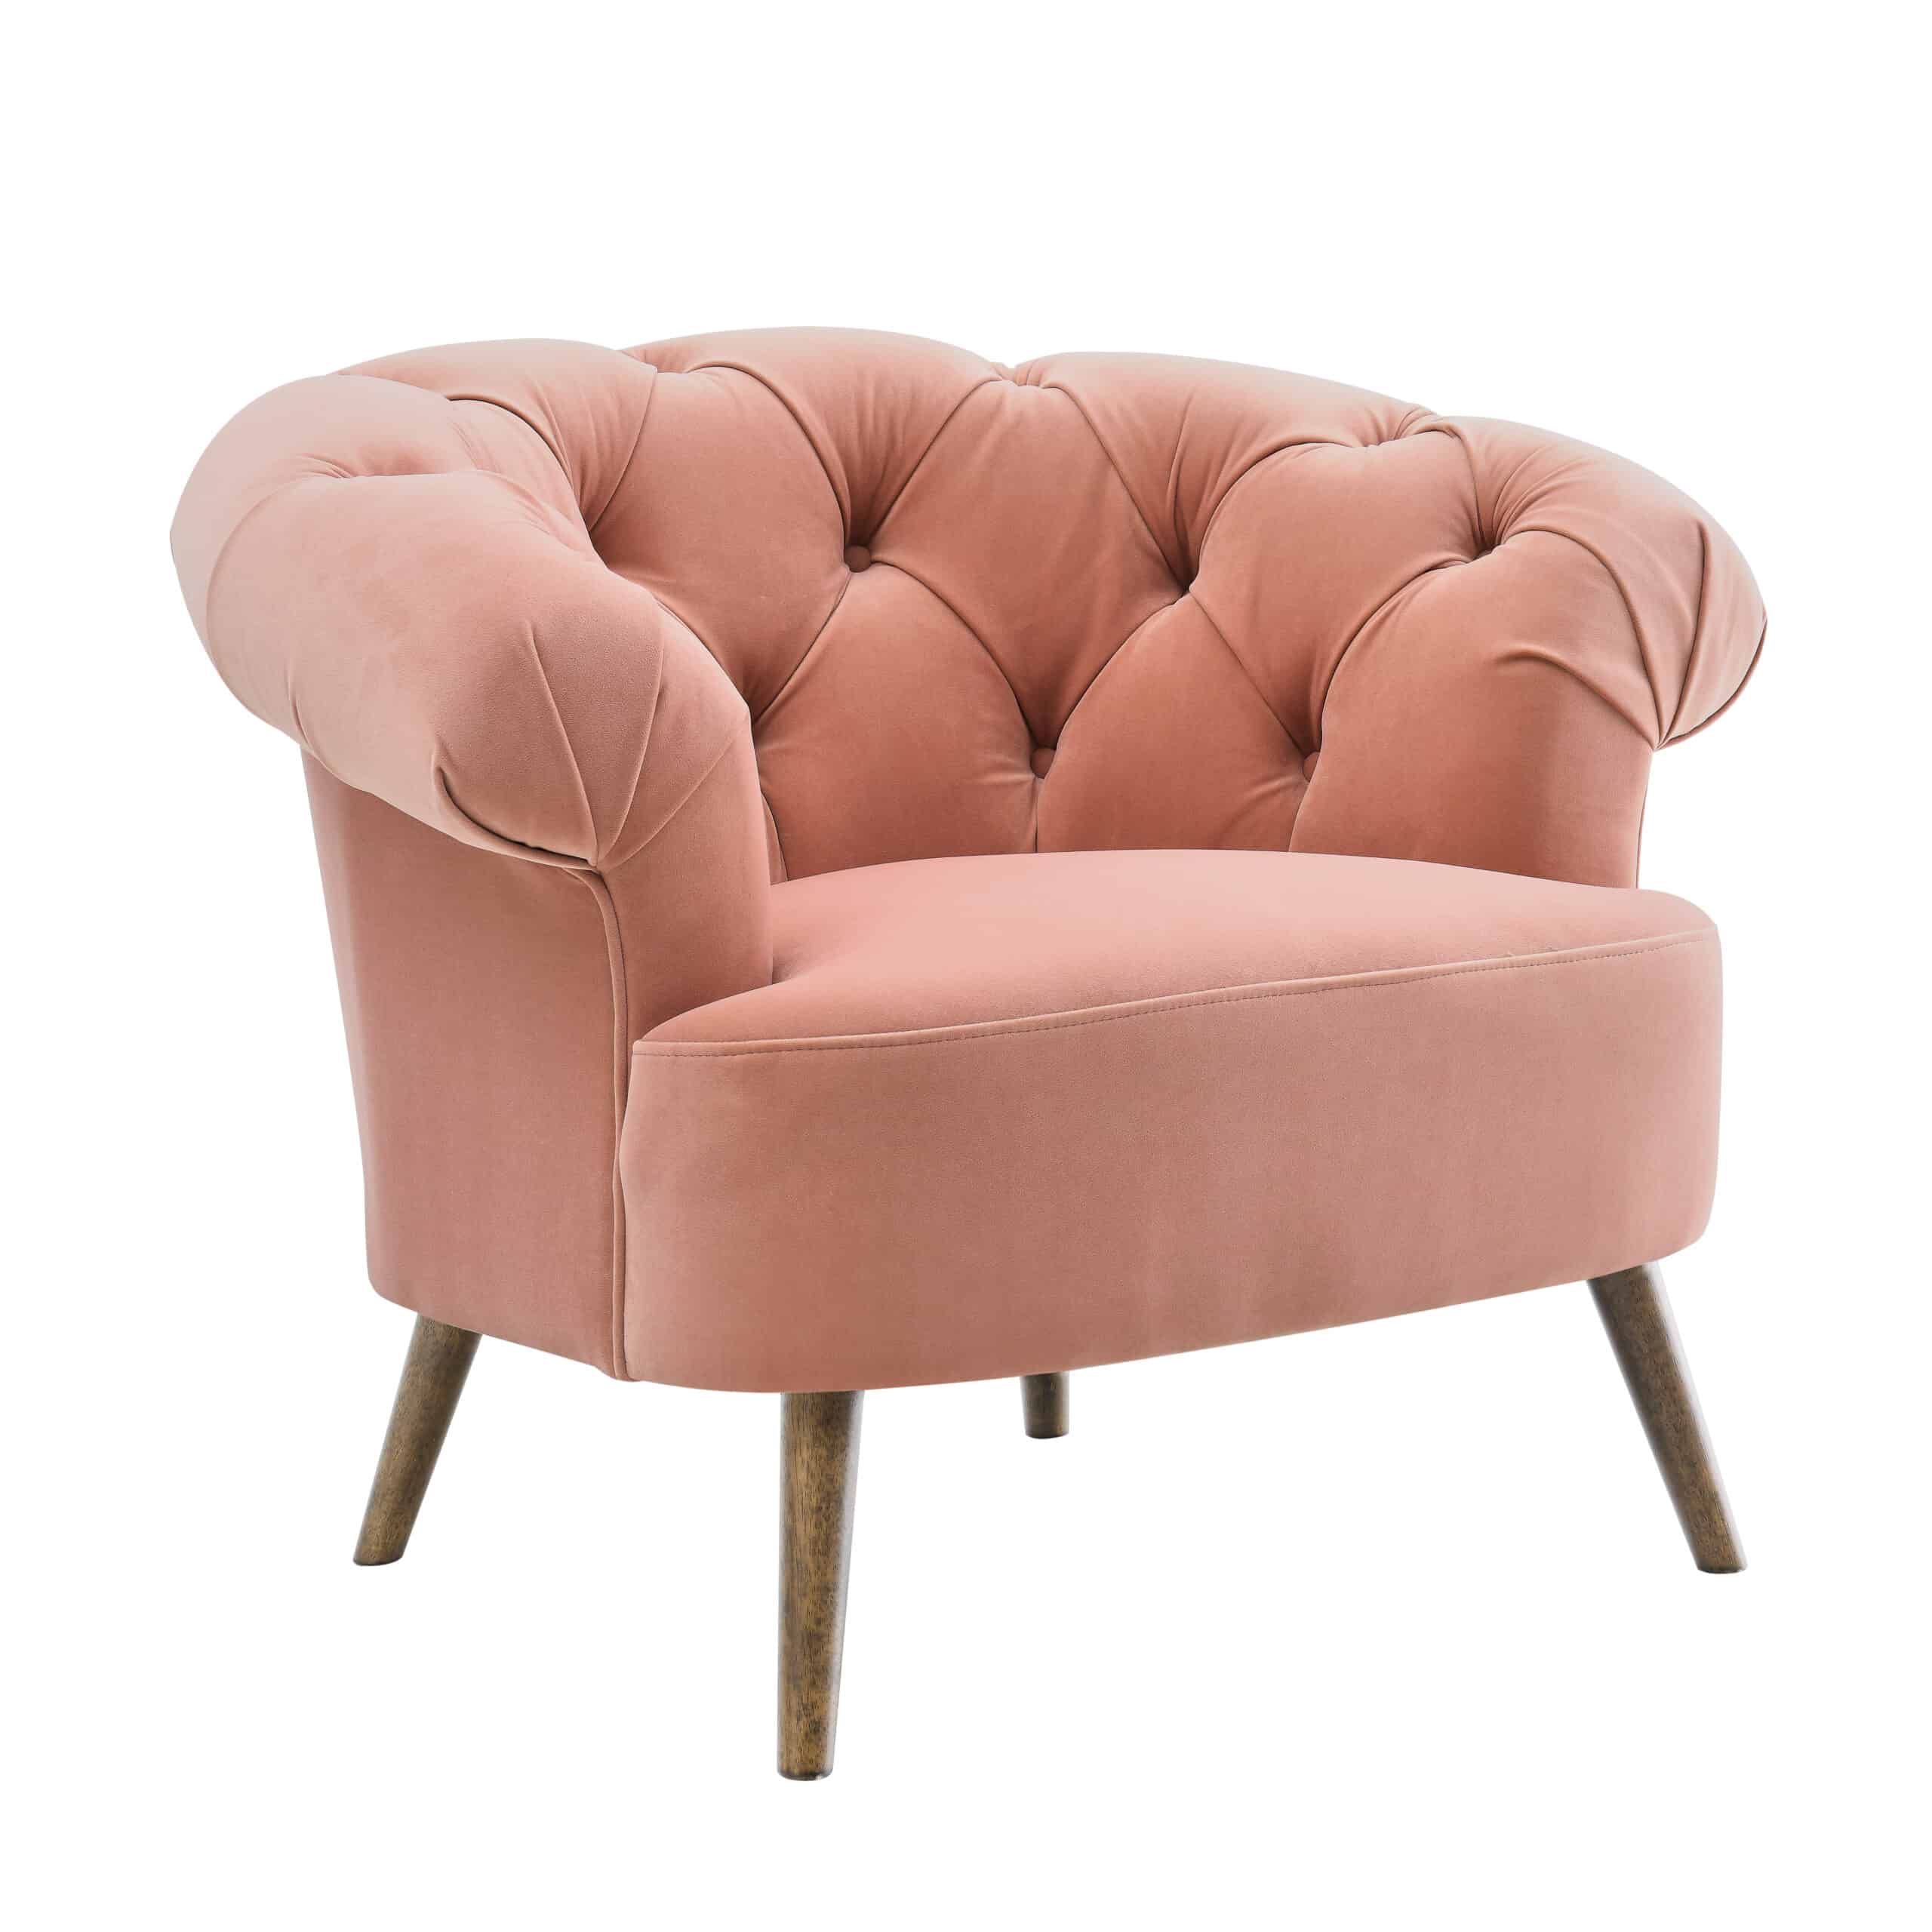 Eversley Blush Pink Chair